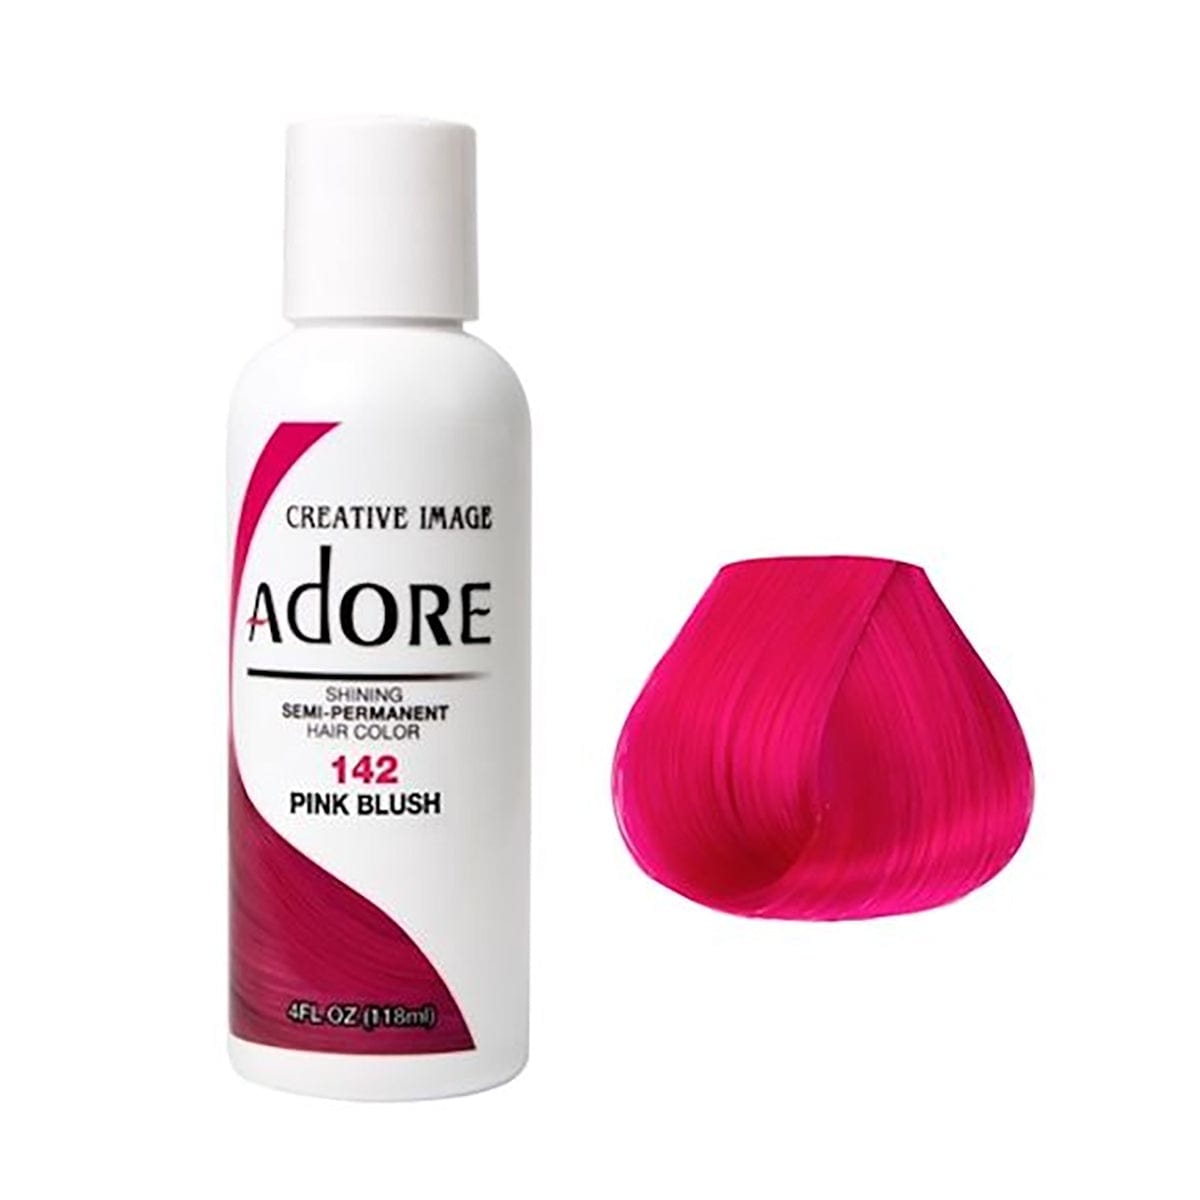 Adore Pink Blush 142 semi-permanent hair color 